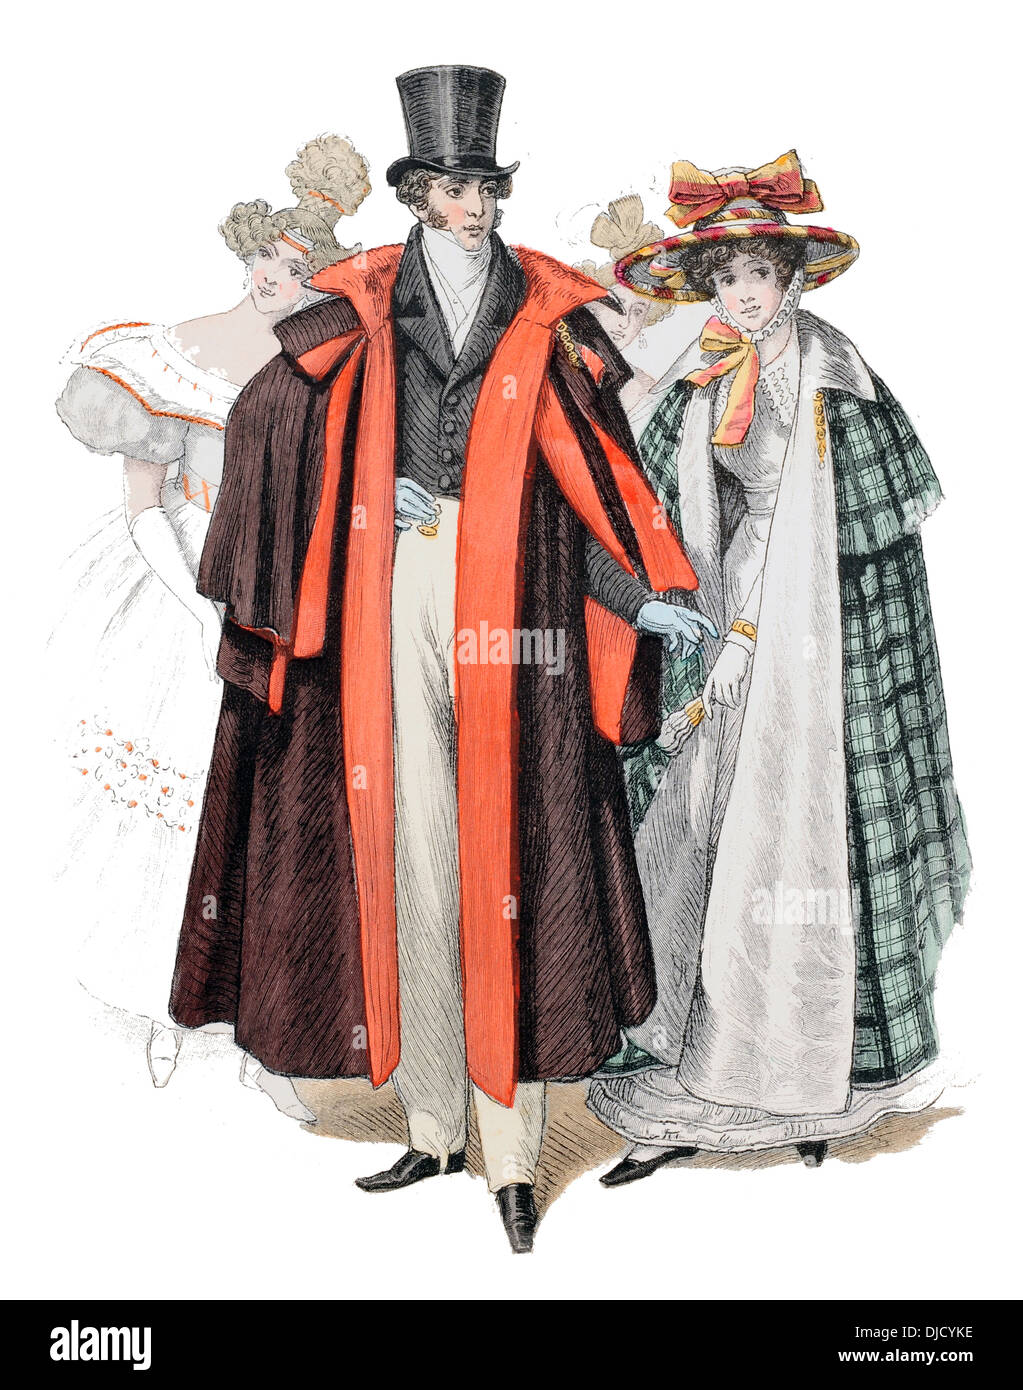 Early 19th century XIX 1800s German costume Stock Photo